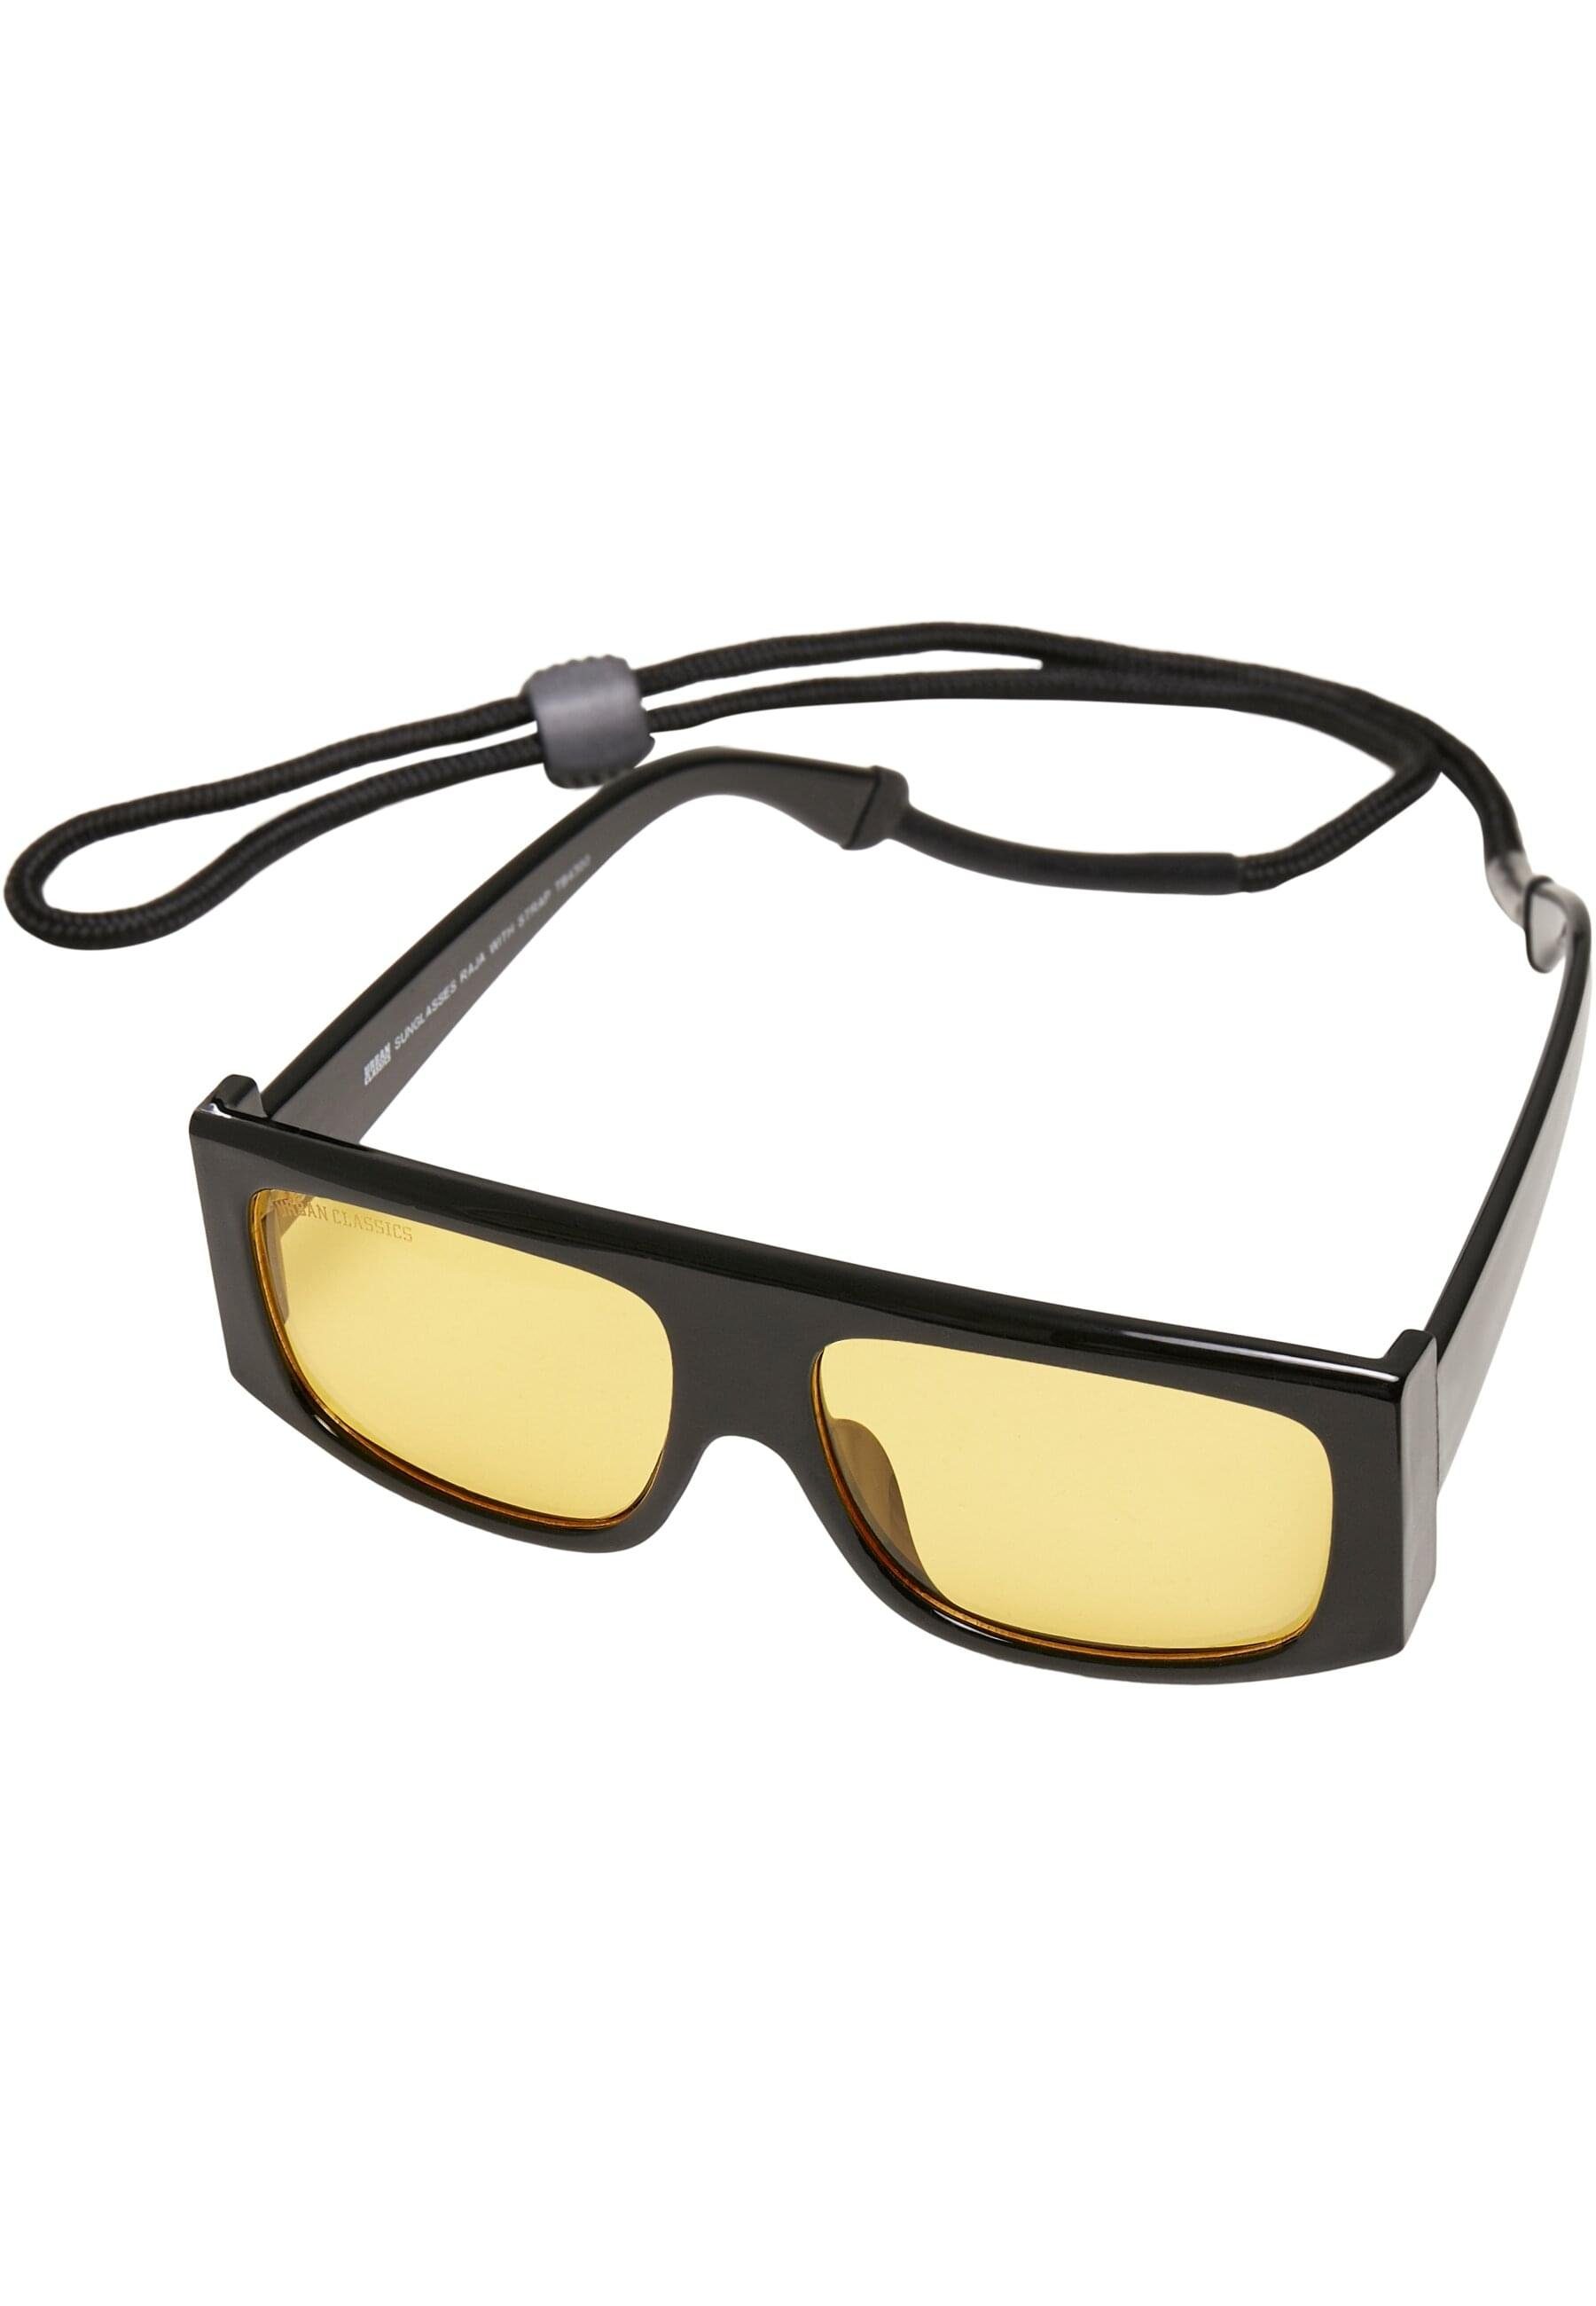 Raja with Sonnenbrille CLASSICS Sunglasses Strap Unisex URBAN